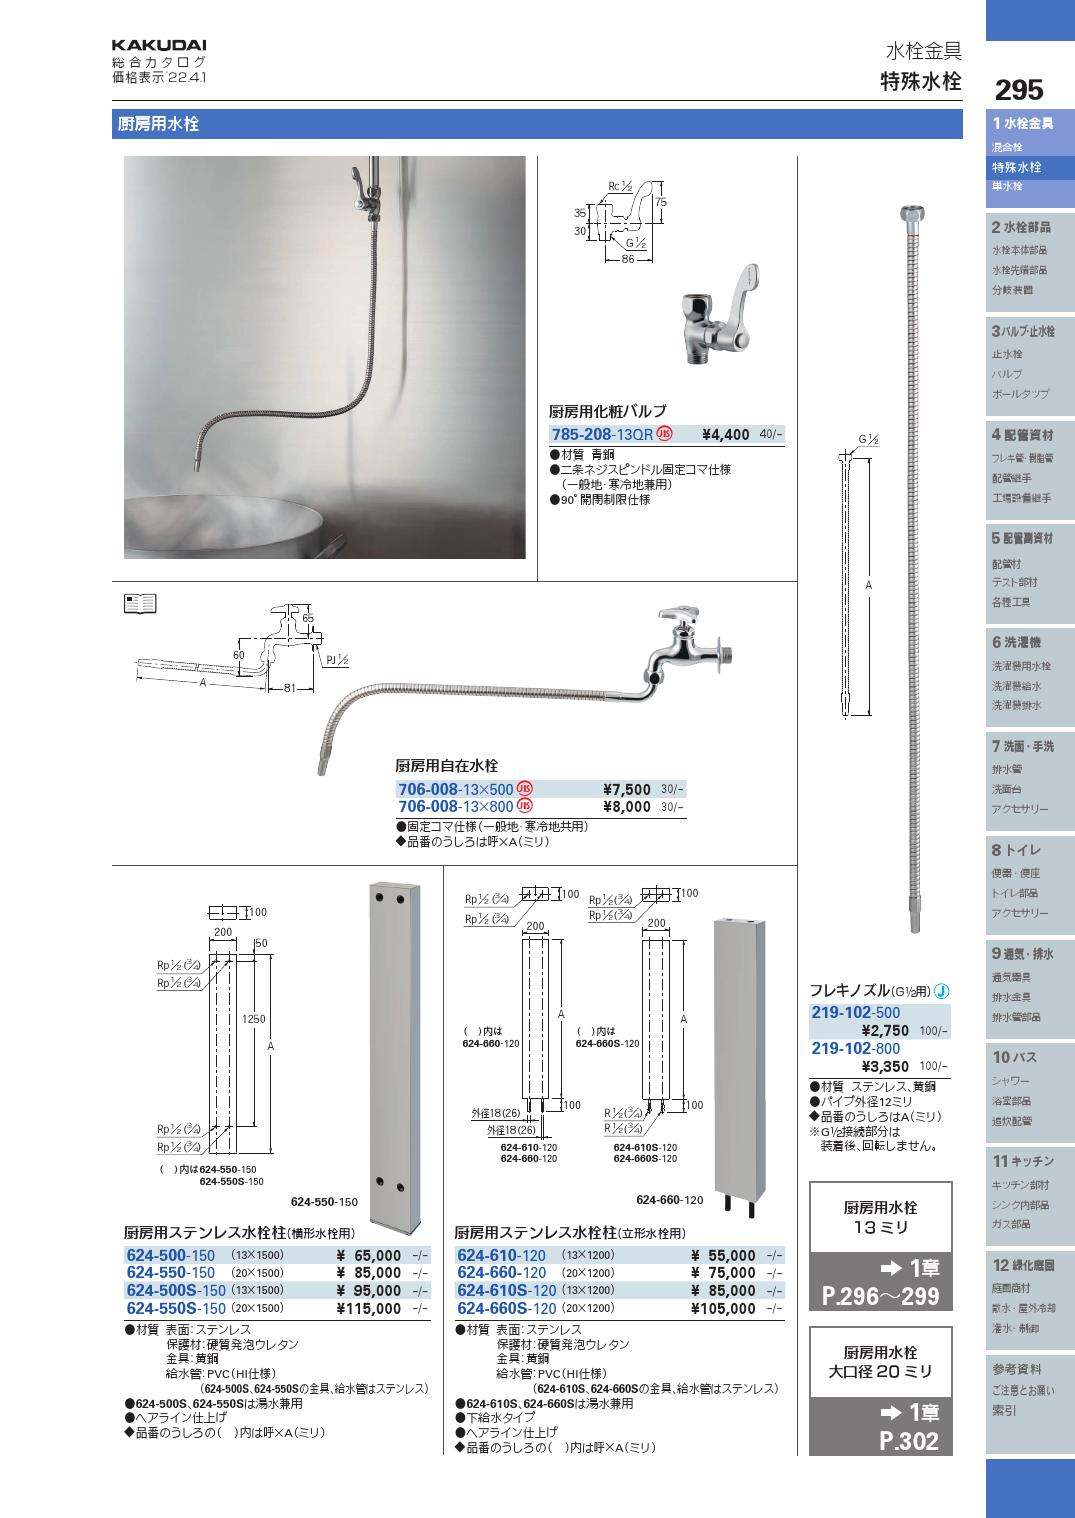  KAKUDAI カクダイ 厨房用ステンレス水栓柱 立形水栓用 （13x1200） - 2